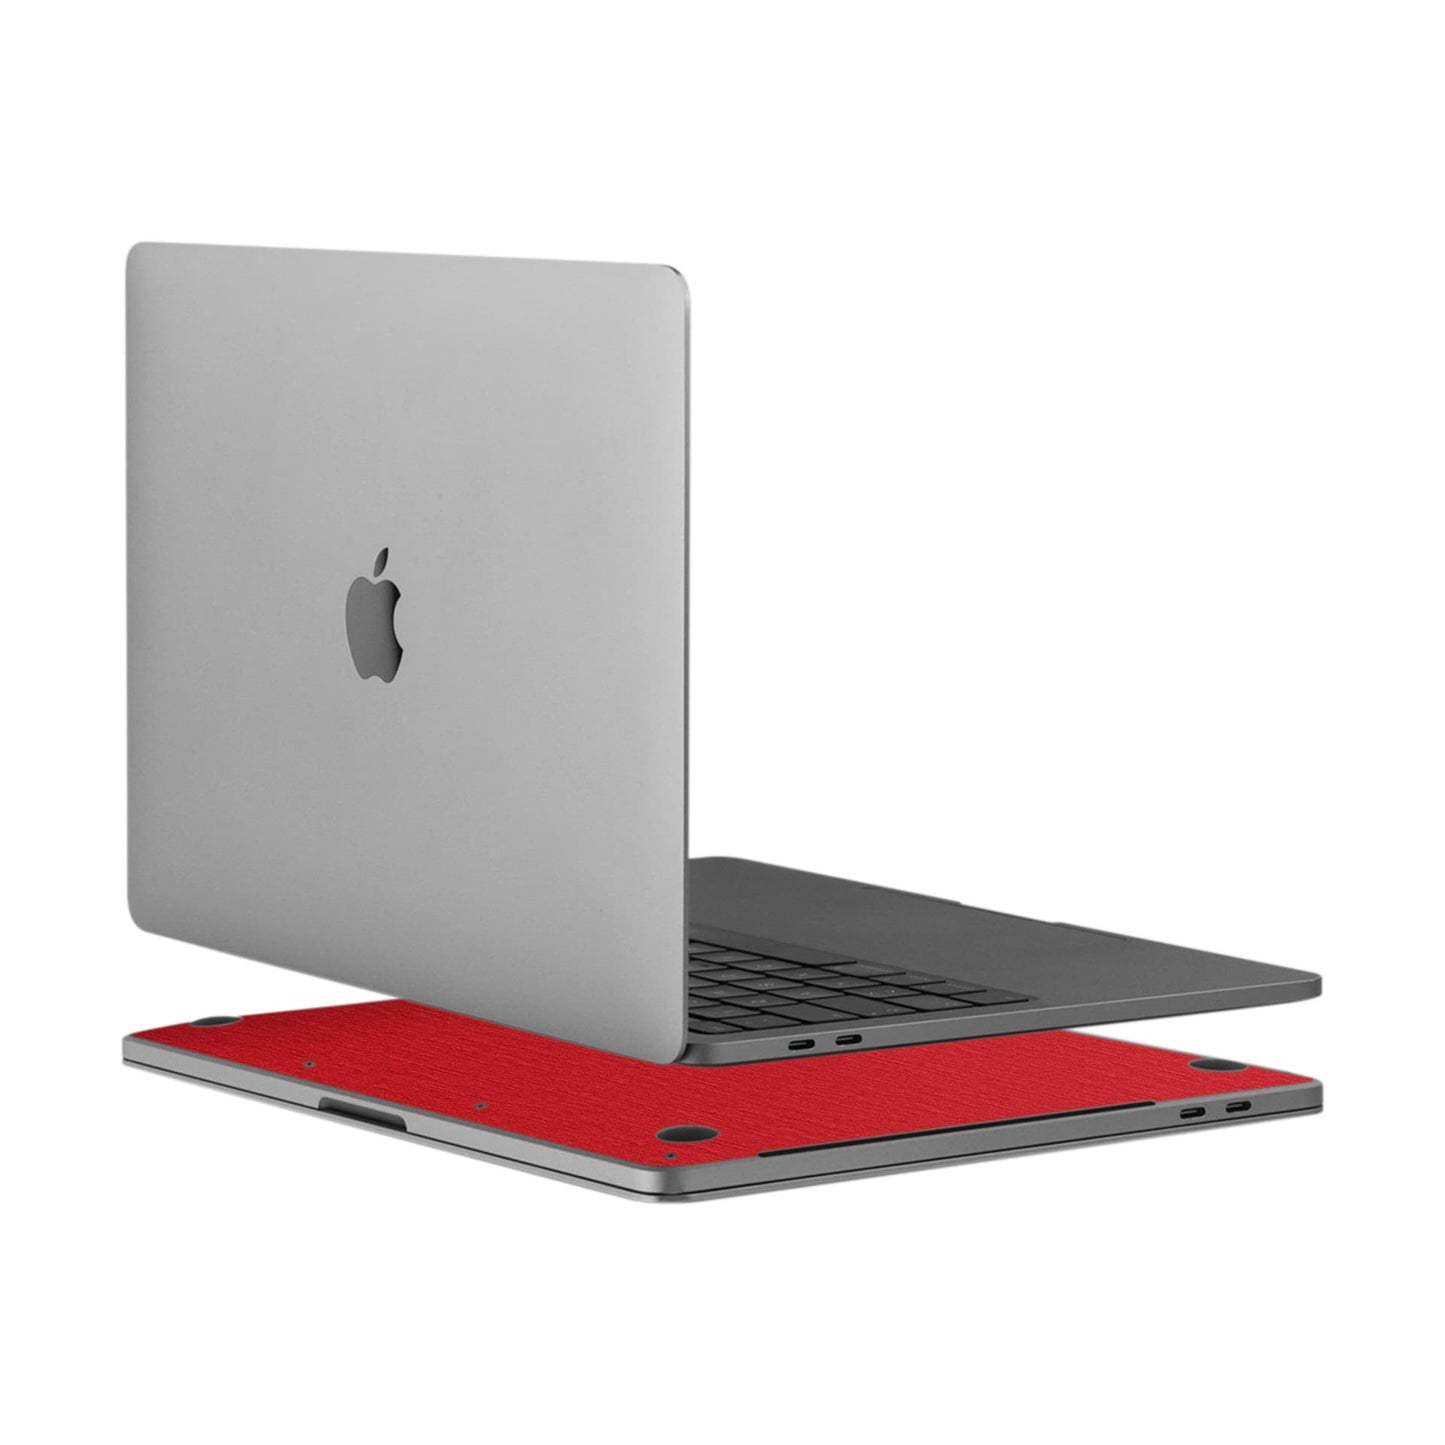 MacBook Pro 13", 4 Thunderbolt Ports (2020) - Metal